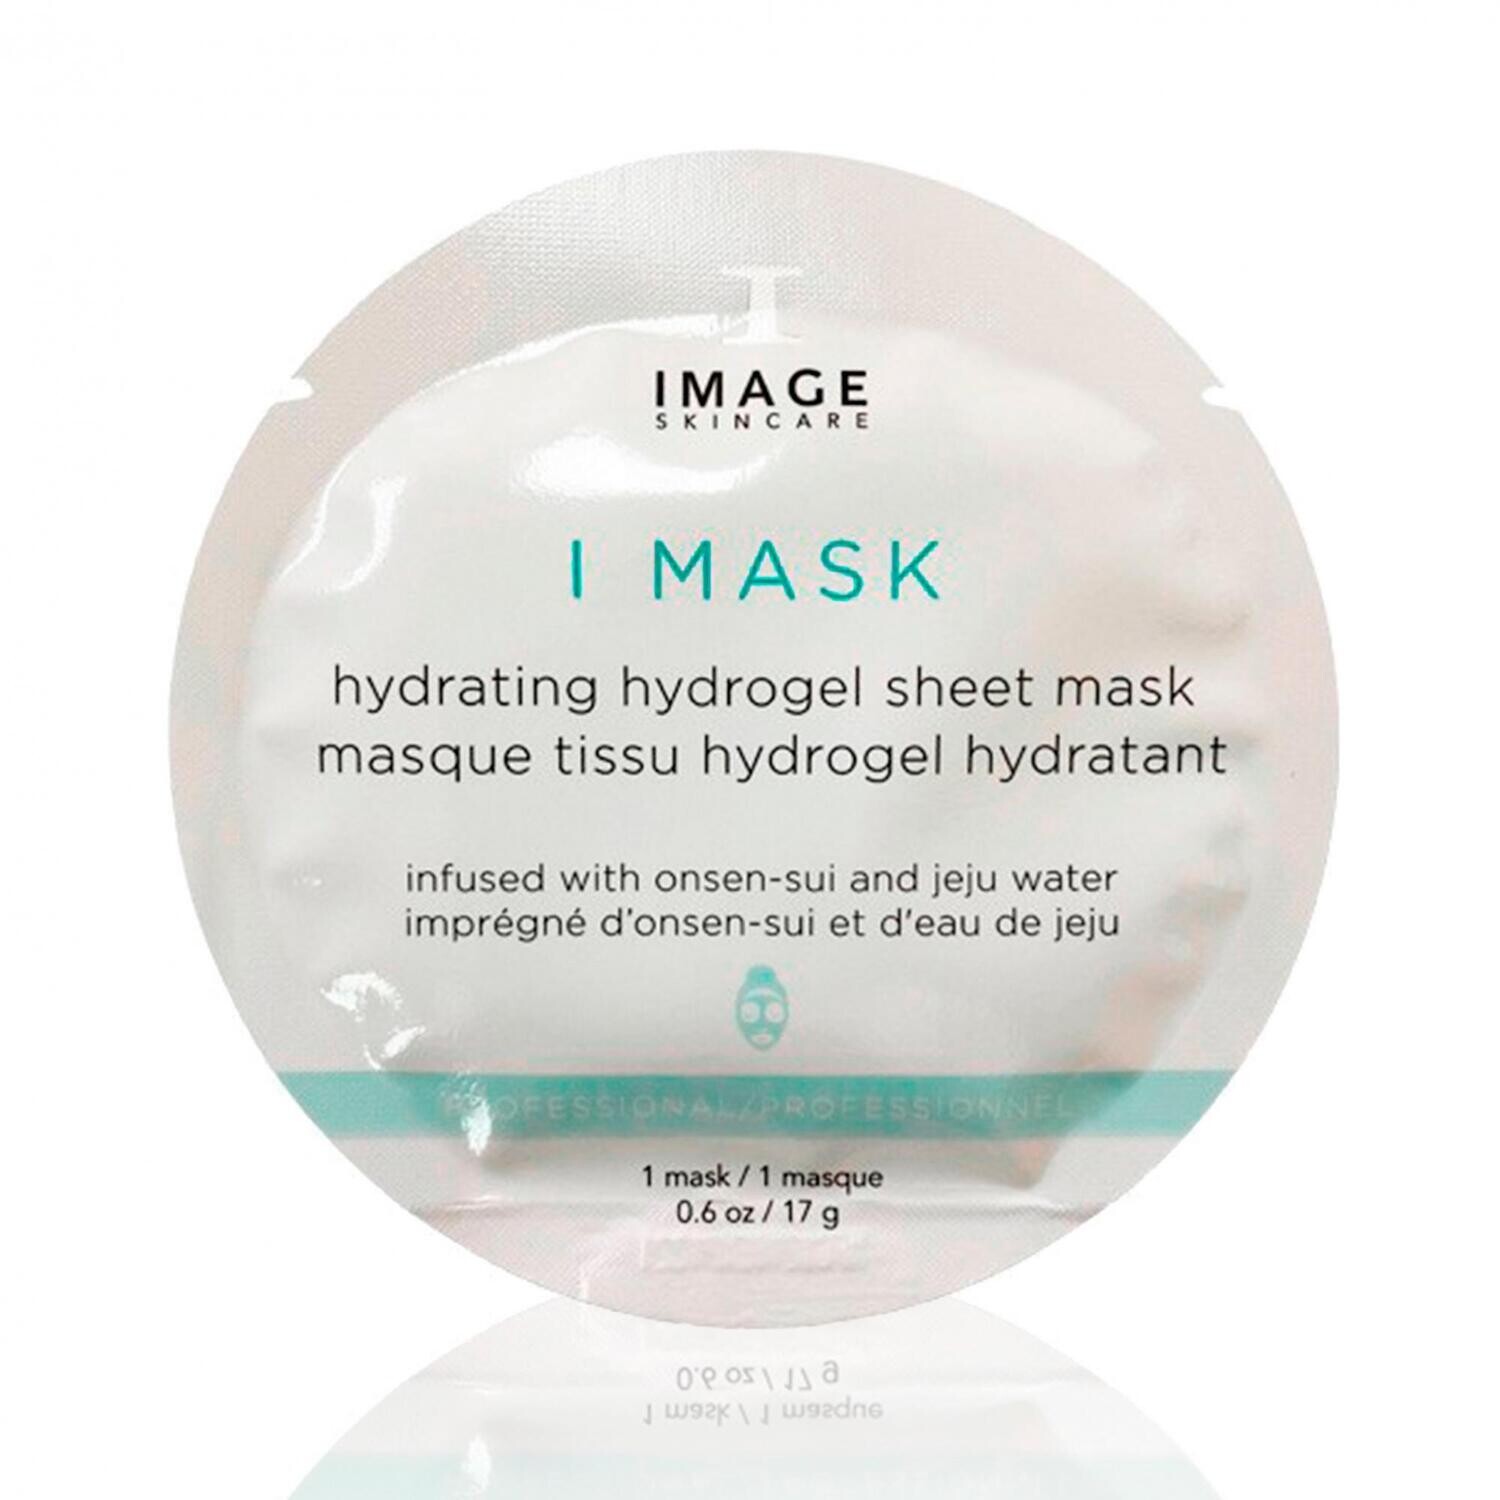 Увлажняющая гидрогелевая маска Image hydrating hydrogel sheet mask